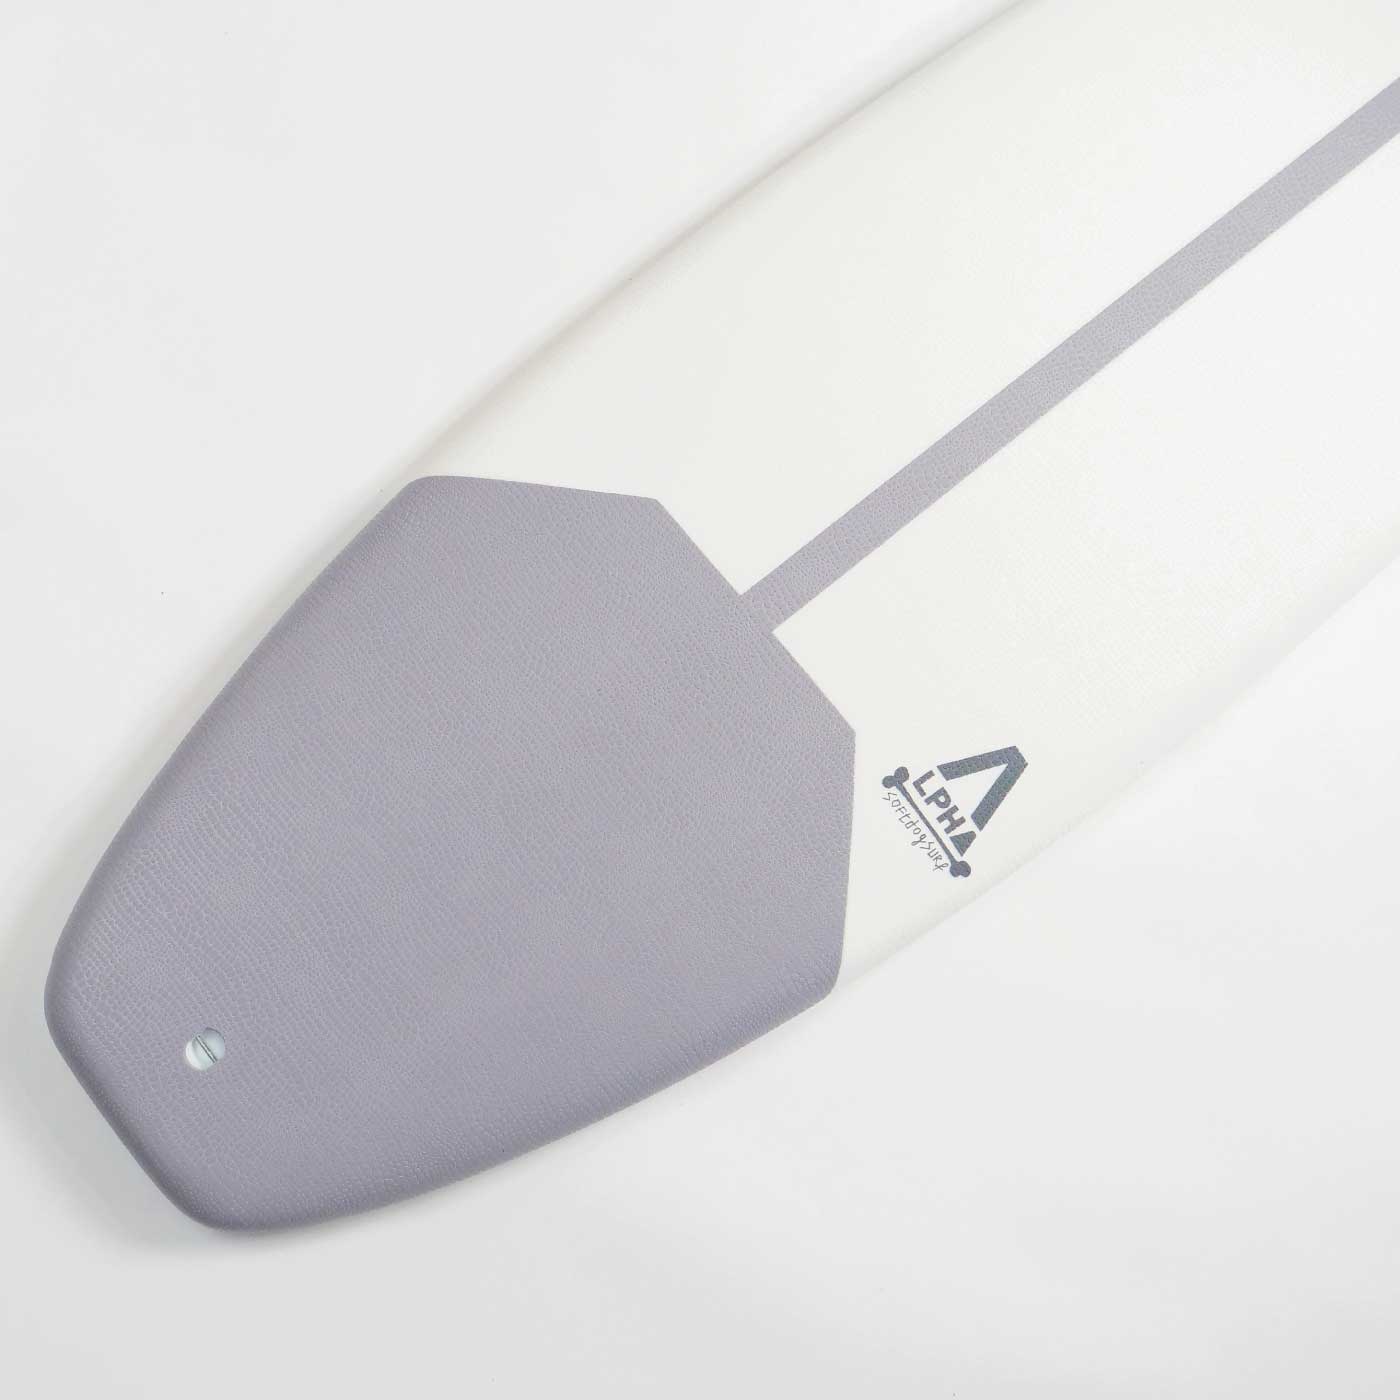 5’2 soft top high-performance surfboard tail grip design